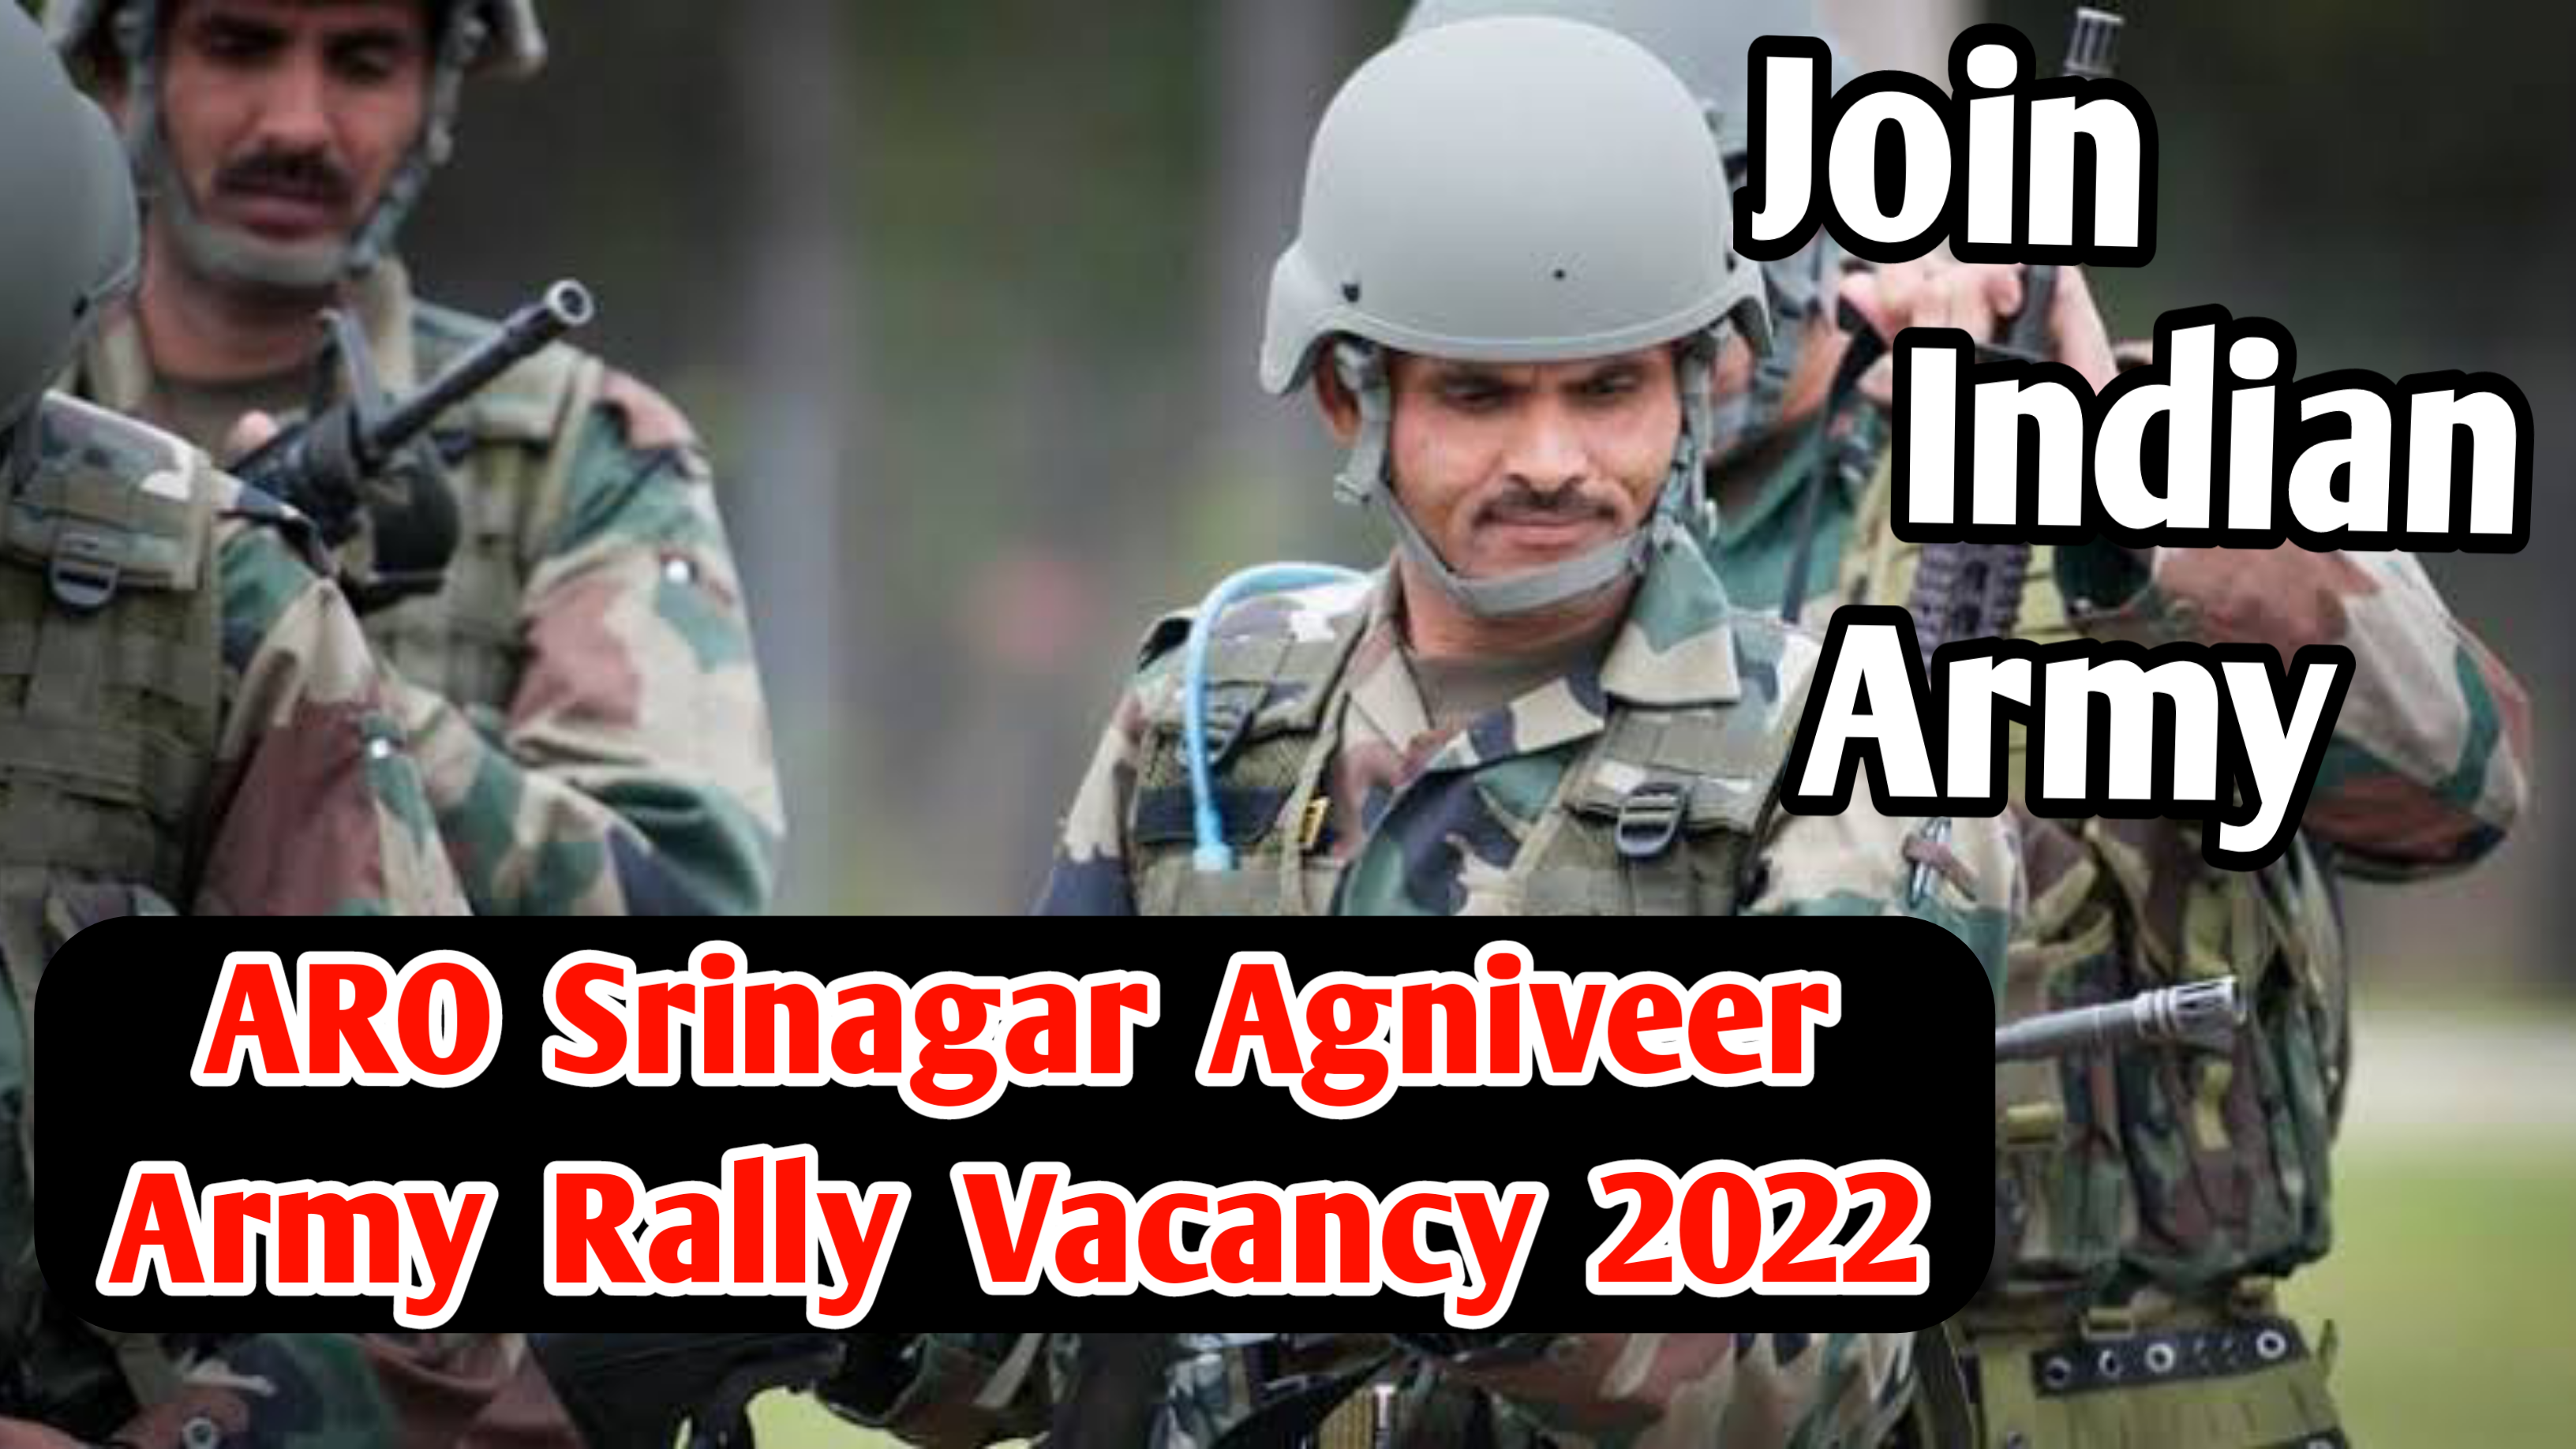 ARO Srinagar Agniveer Army Rally Vacancy 2022